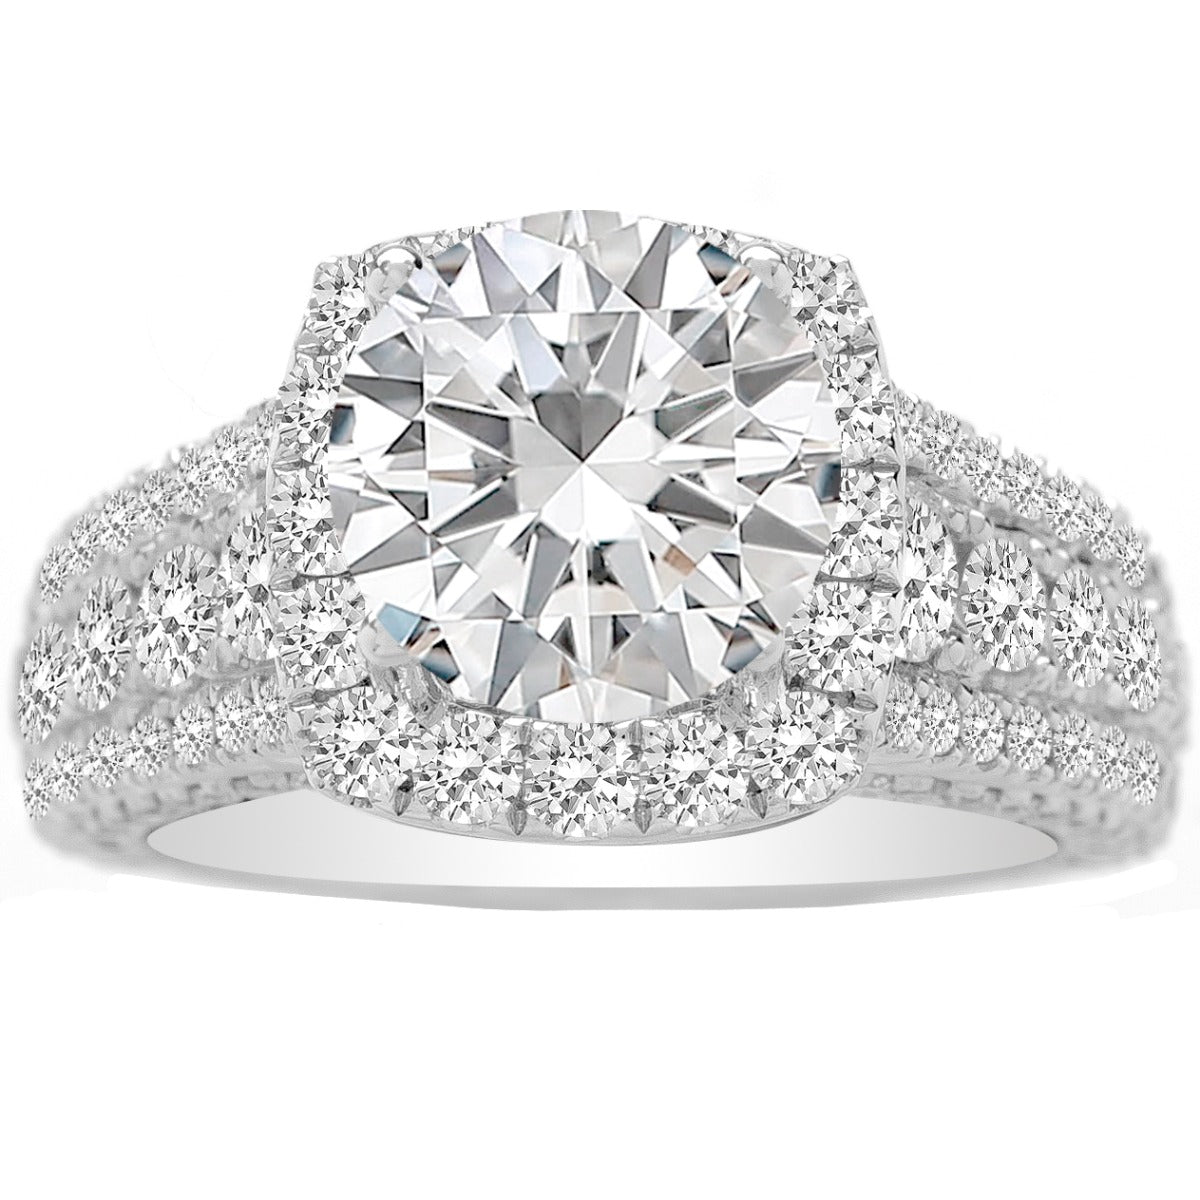 Amadra Diamond Engagement Ring Setting in 14K White Gold; 1.70 ctw